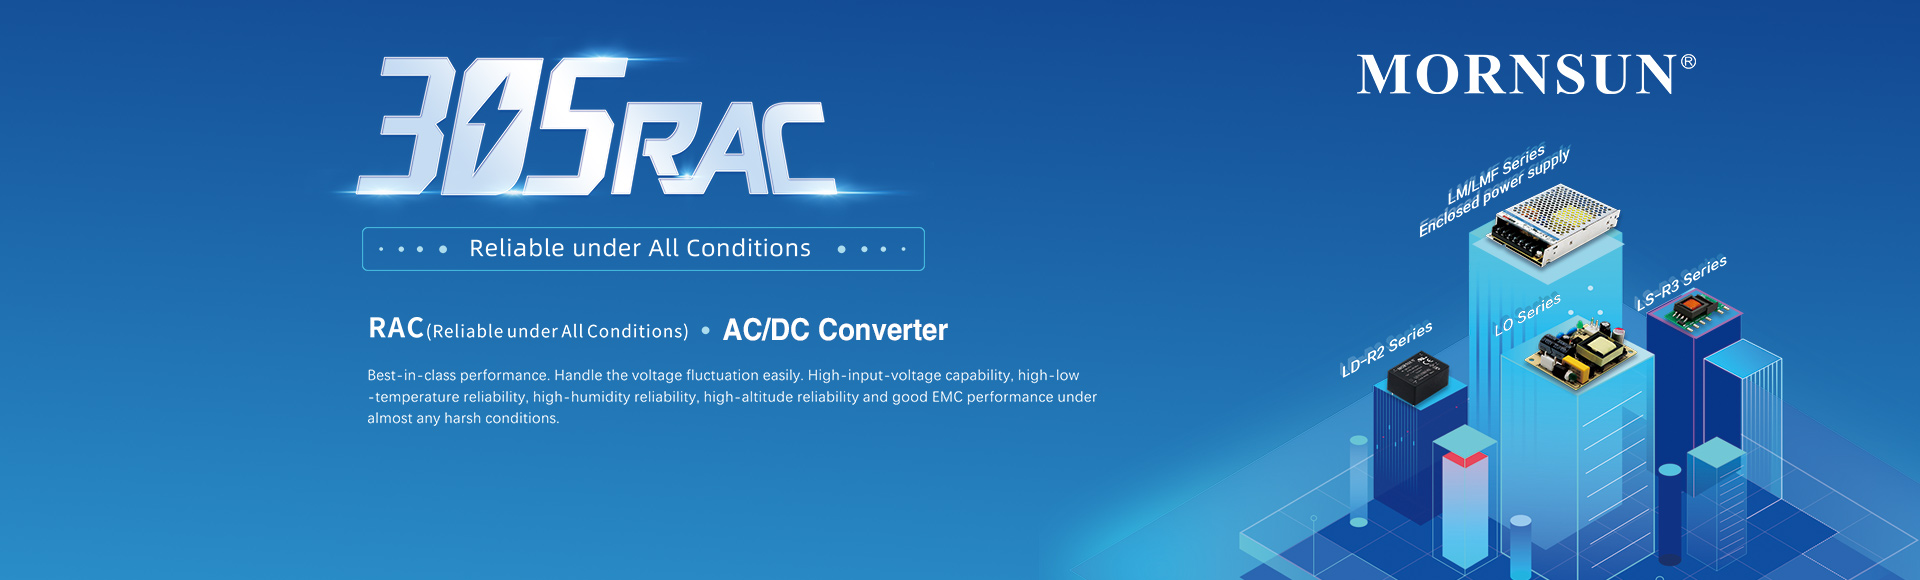 305 RAC AC/DC Converter